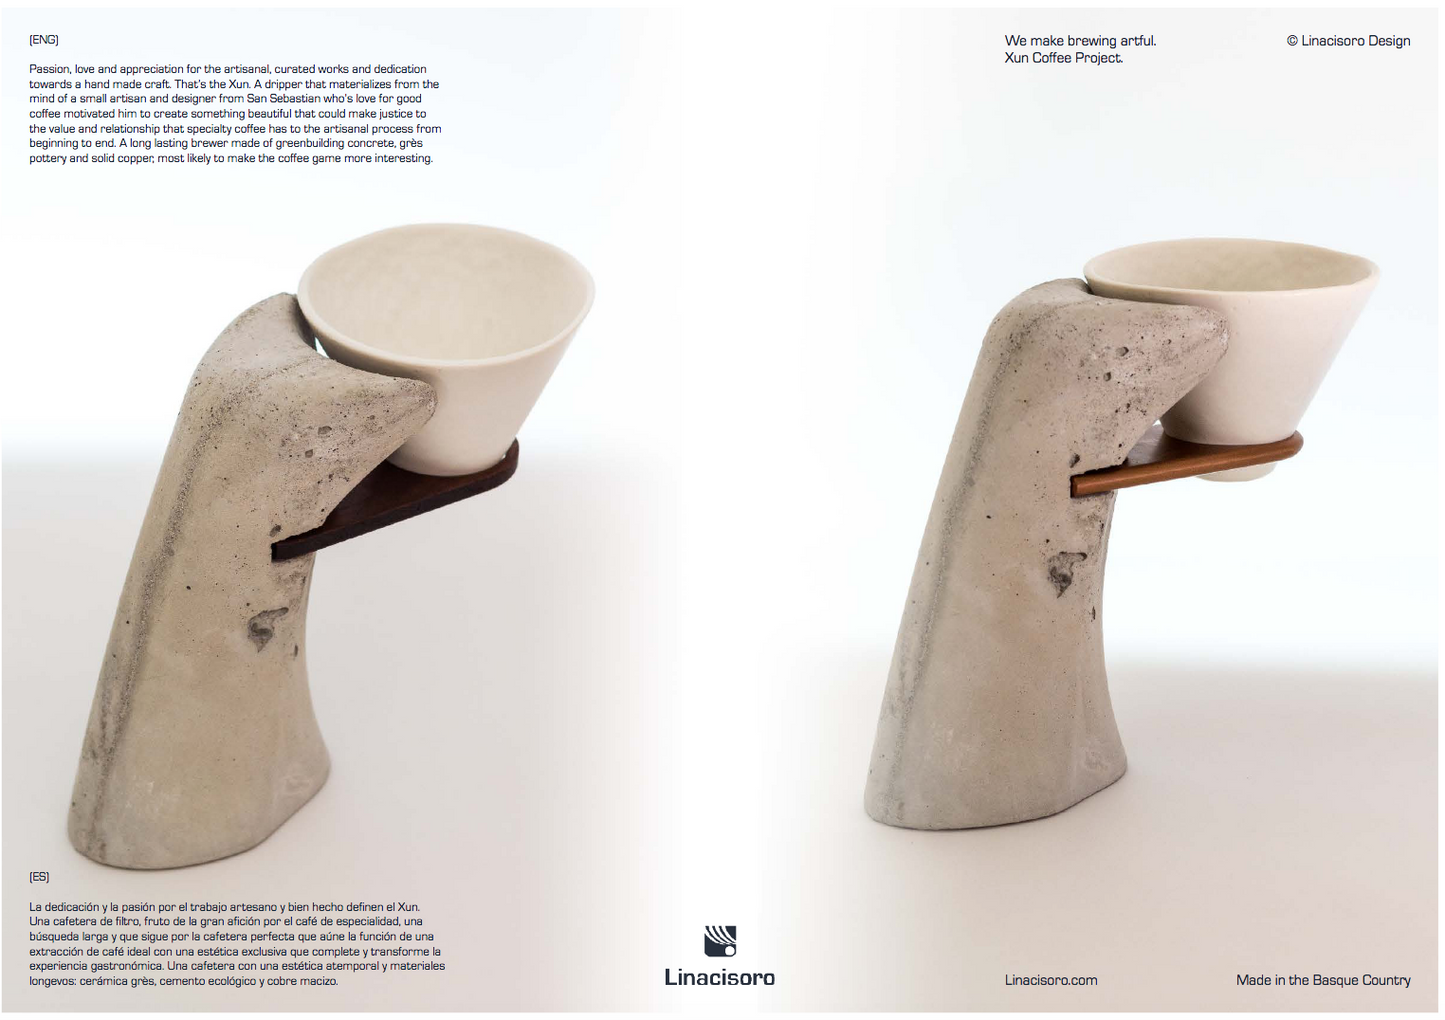 Xun Brutalist Coffee Dripper (wood)  beamalevich architecture gift design gift art gift